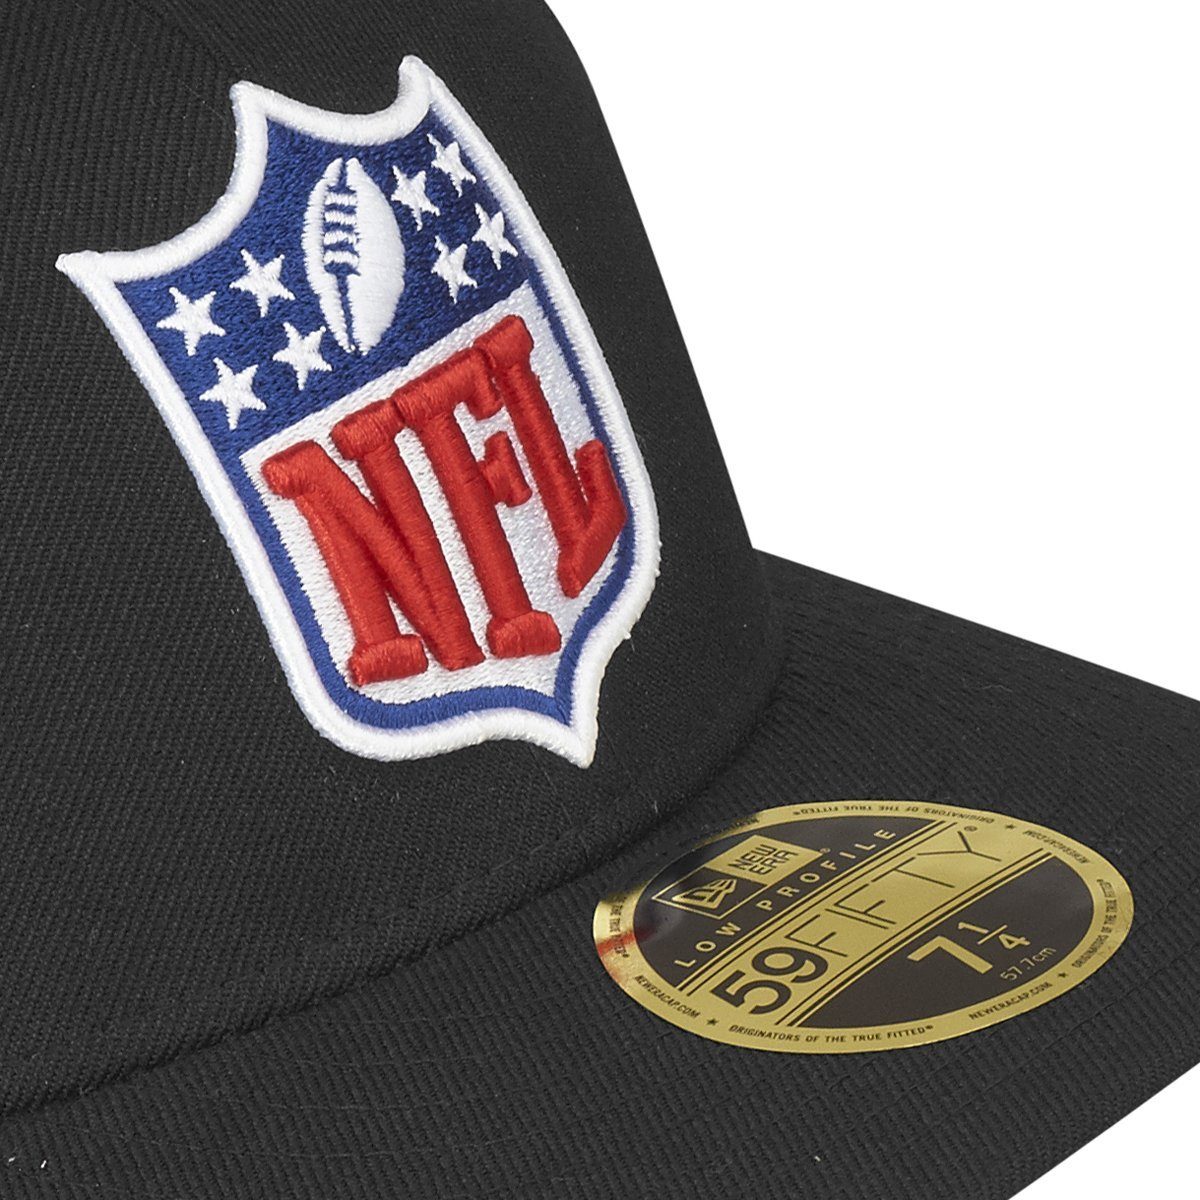 Schwarz Profile New Fitted Shield Era NFL Logo Low 59Fifty Cap